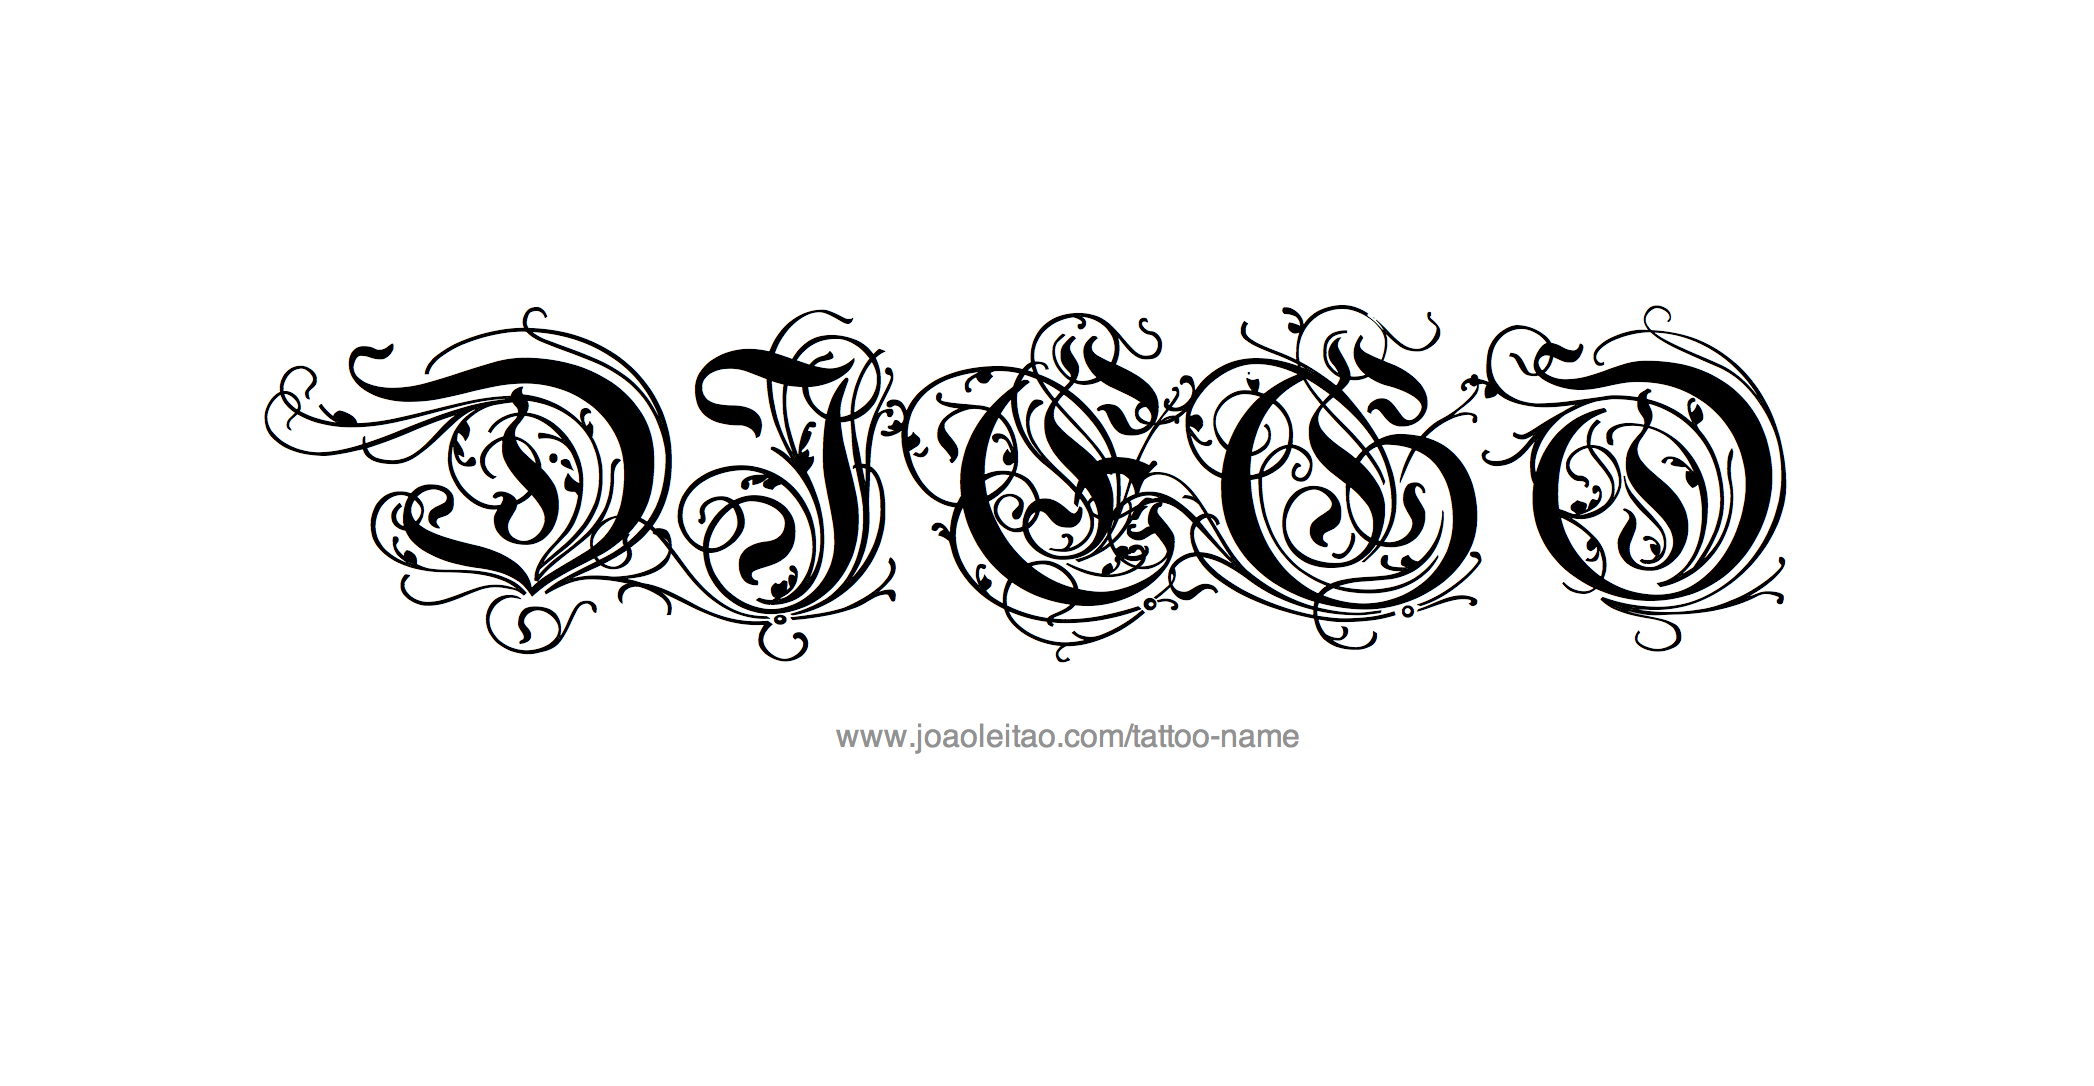 Tattoo Design Name Diego